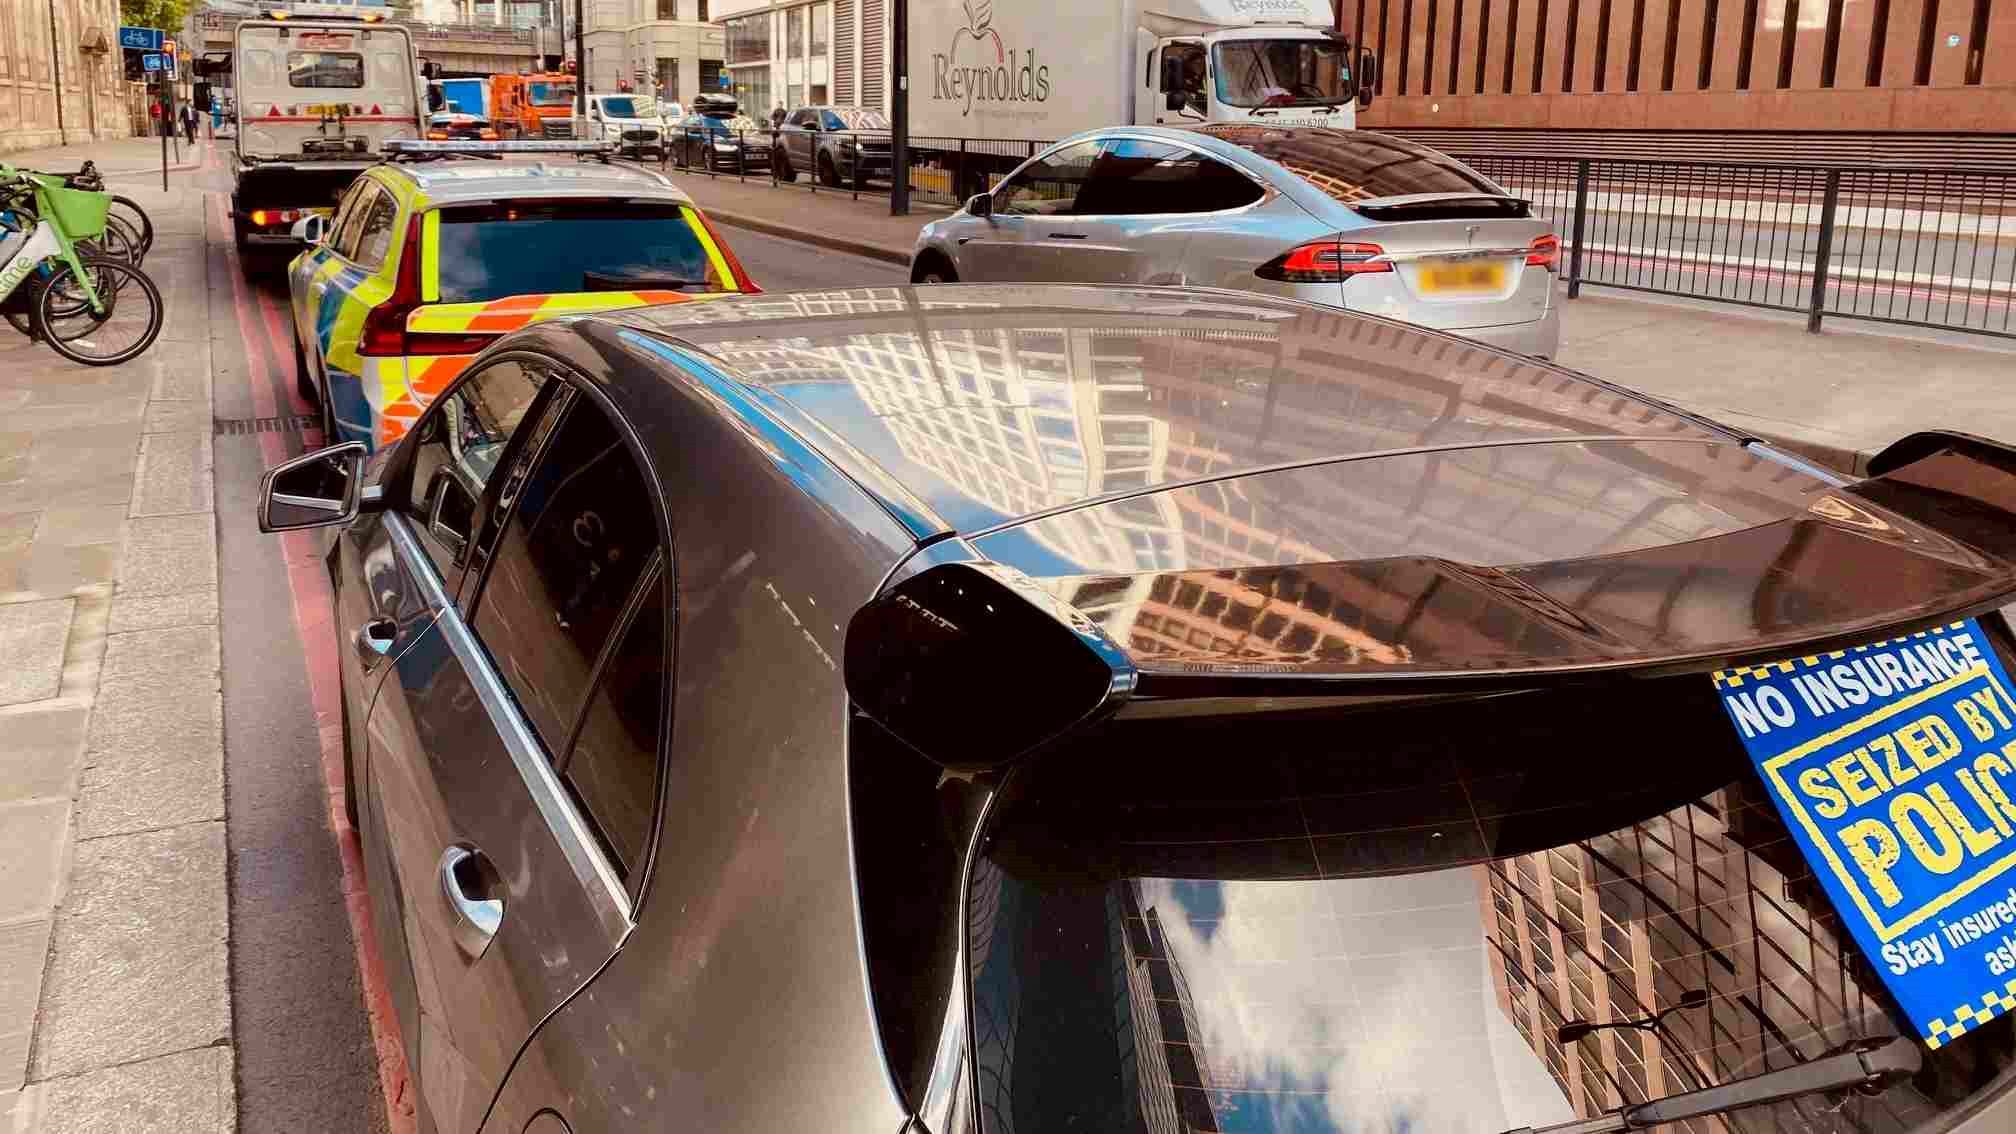 Car seized for insurance fraud on London street